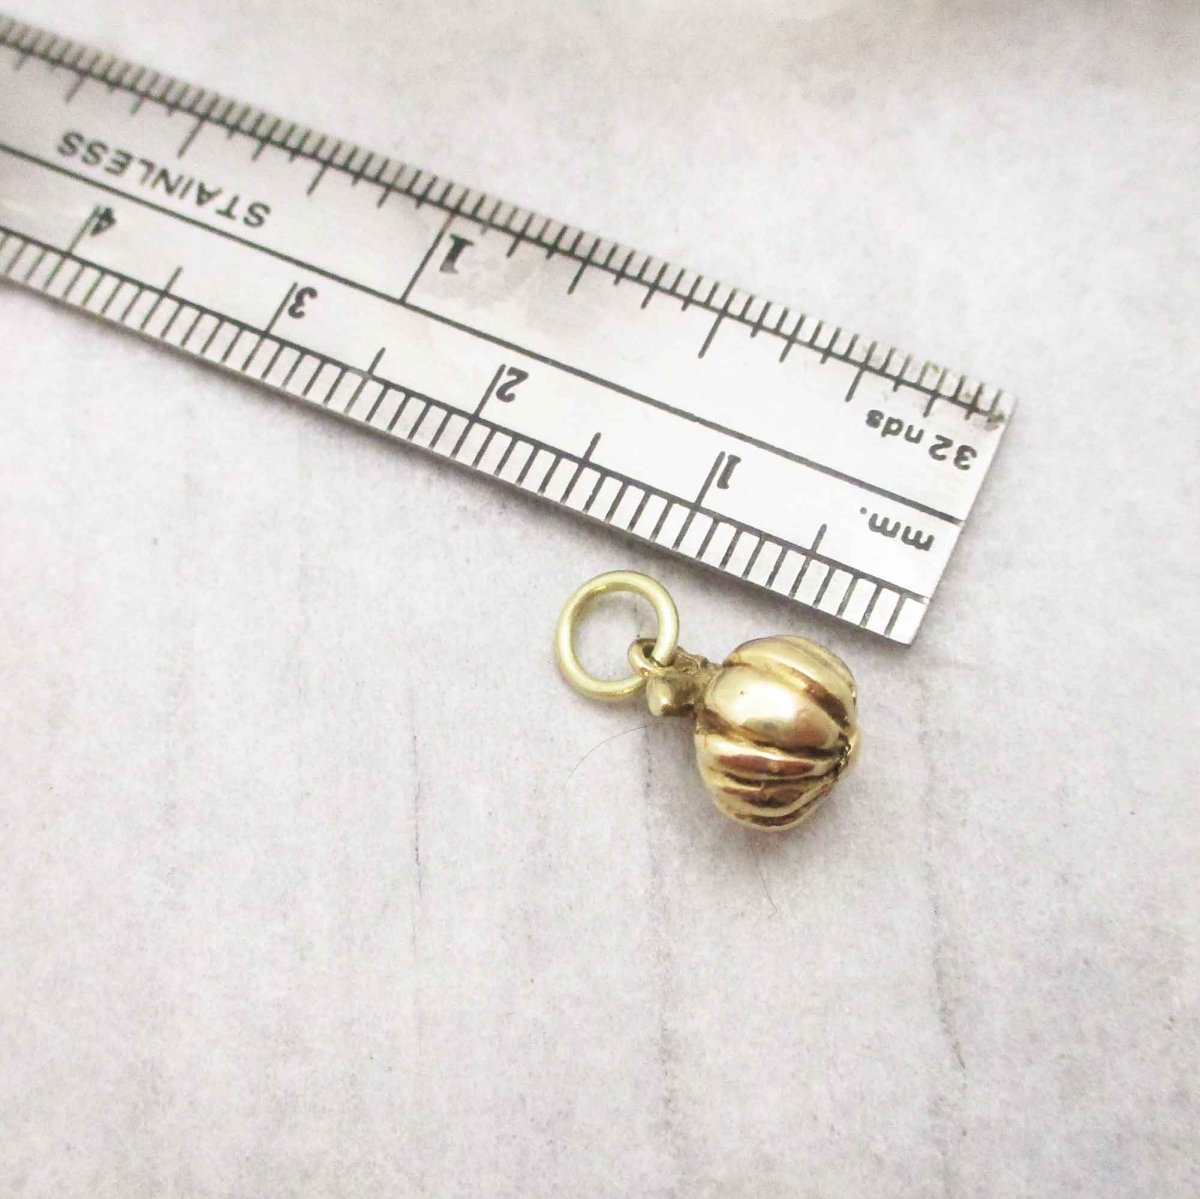 Little Pumpkin Charm in Solid 14 Karat Gold - Luxe Design Jewellery